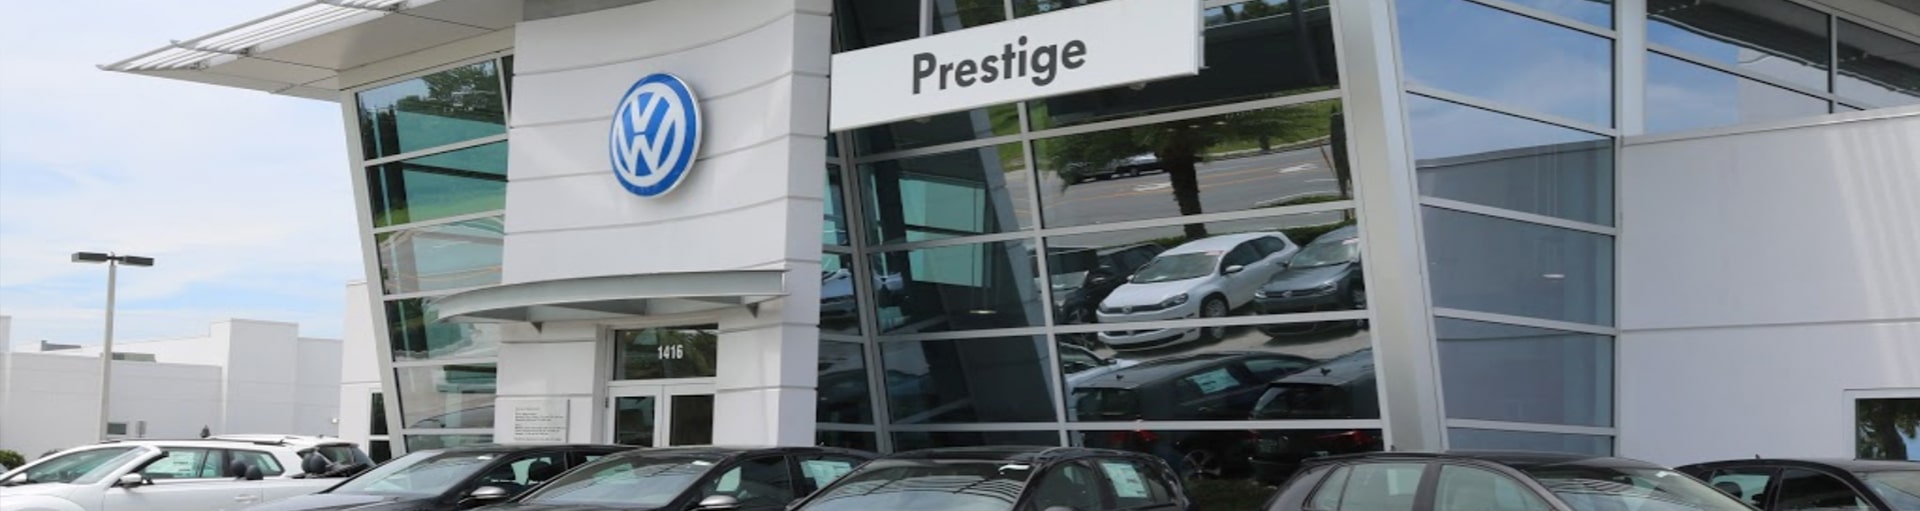 Prestige Volkswagen of Melbourne A/C Service & Repair